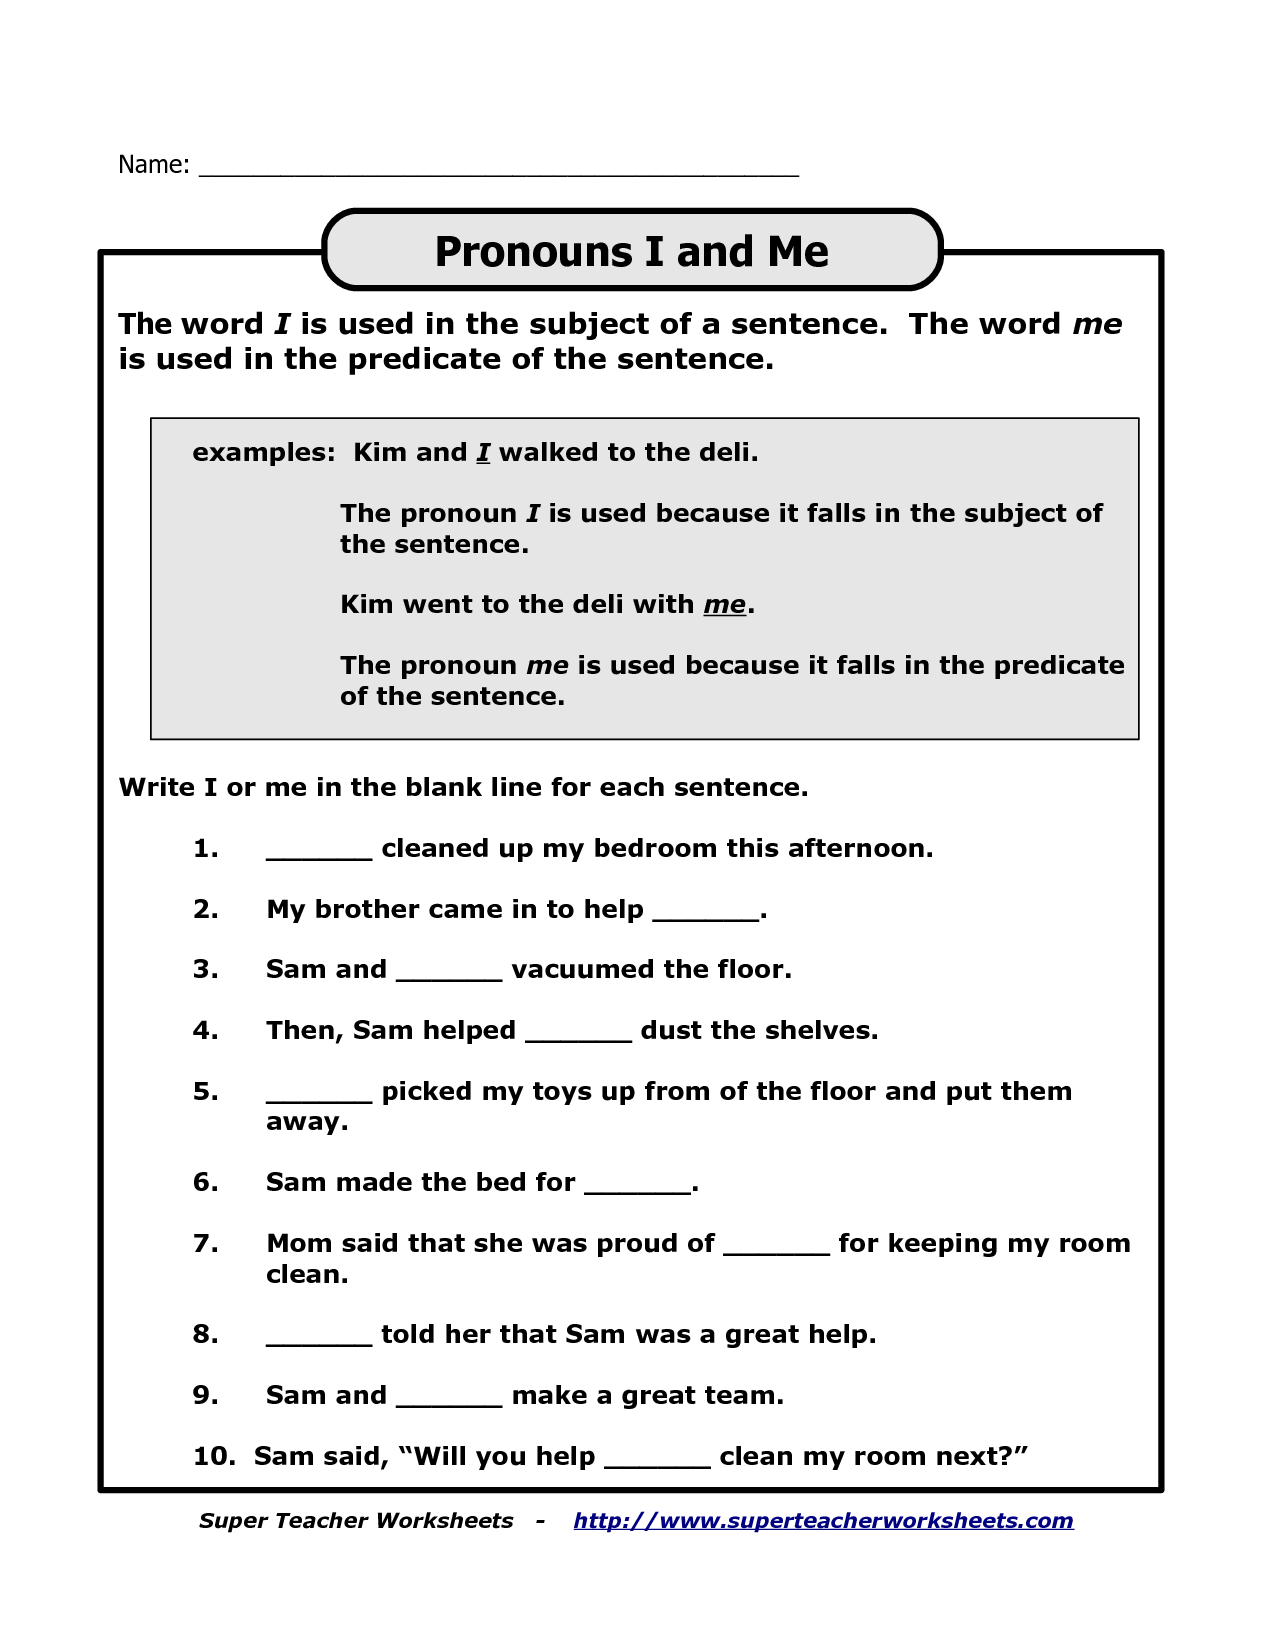 13-intensive-pronouns-worksheets-worksheeto